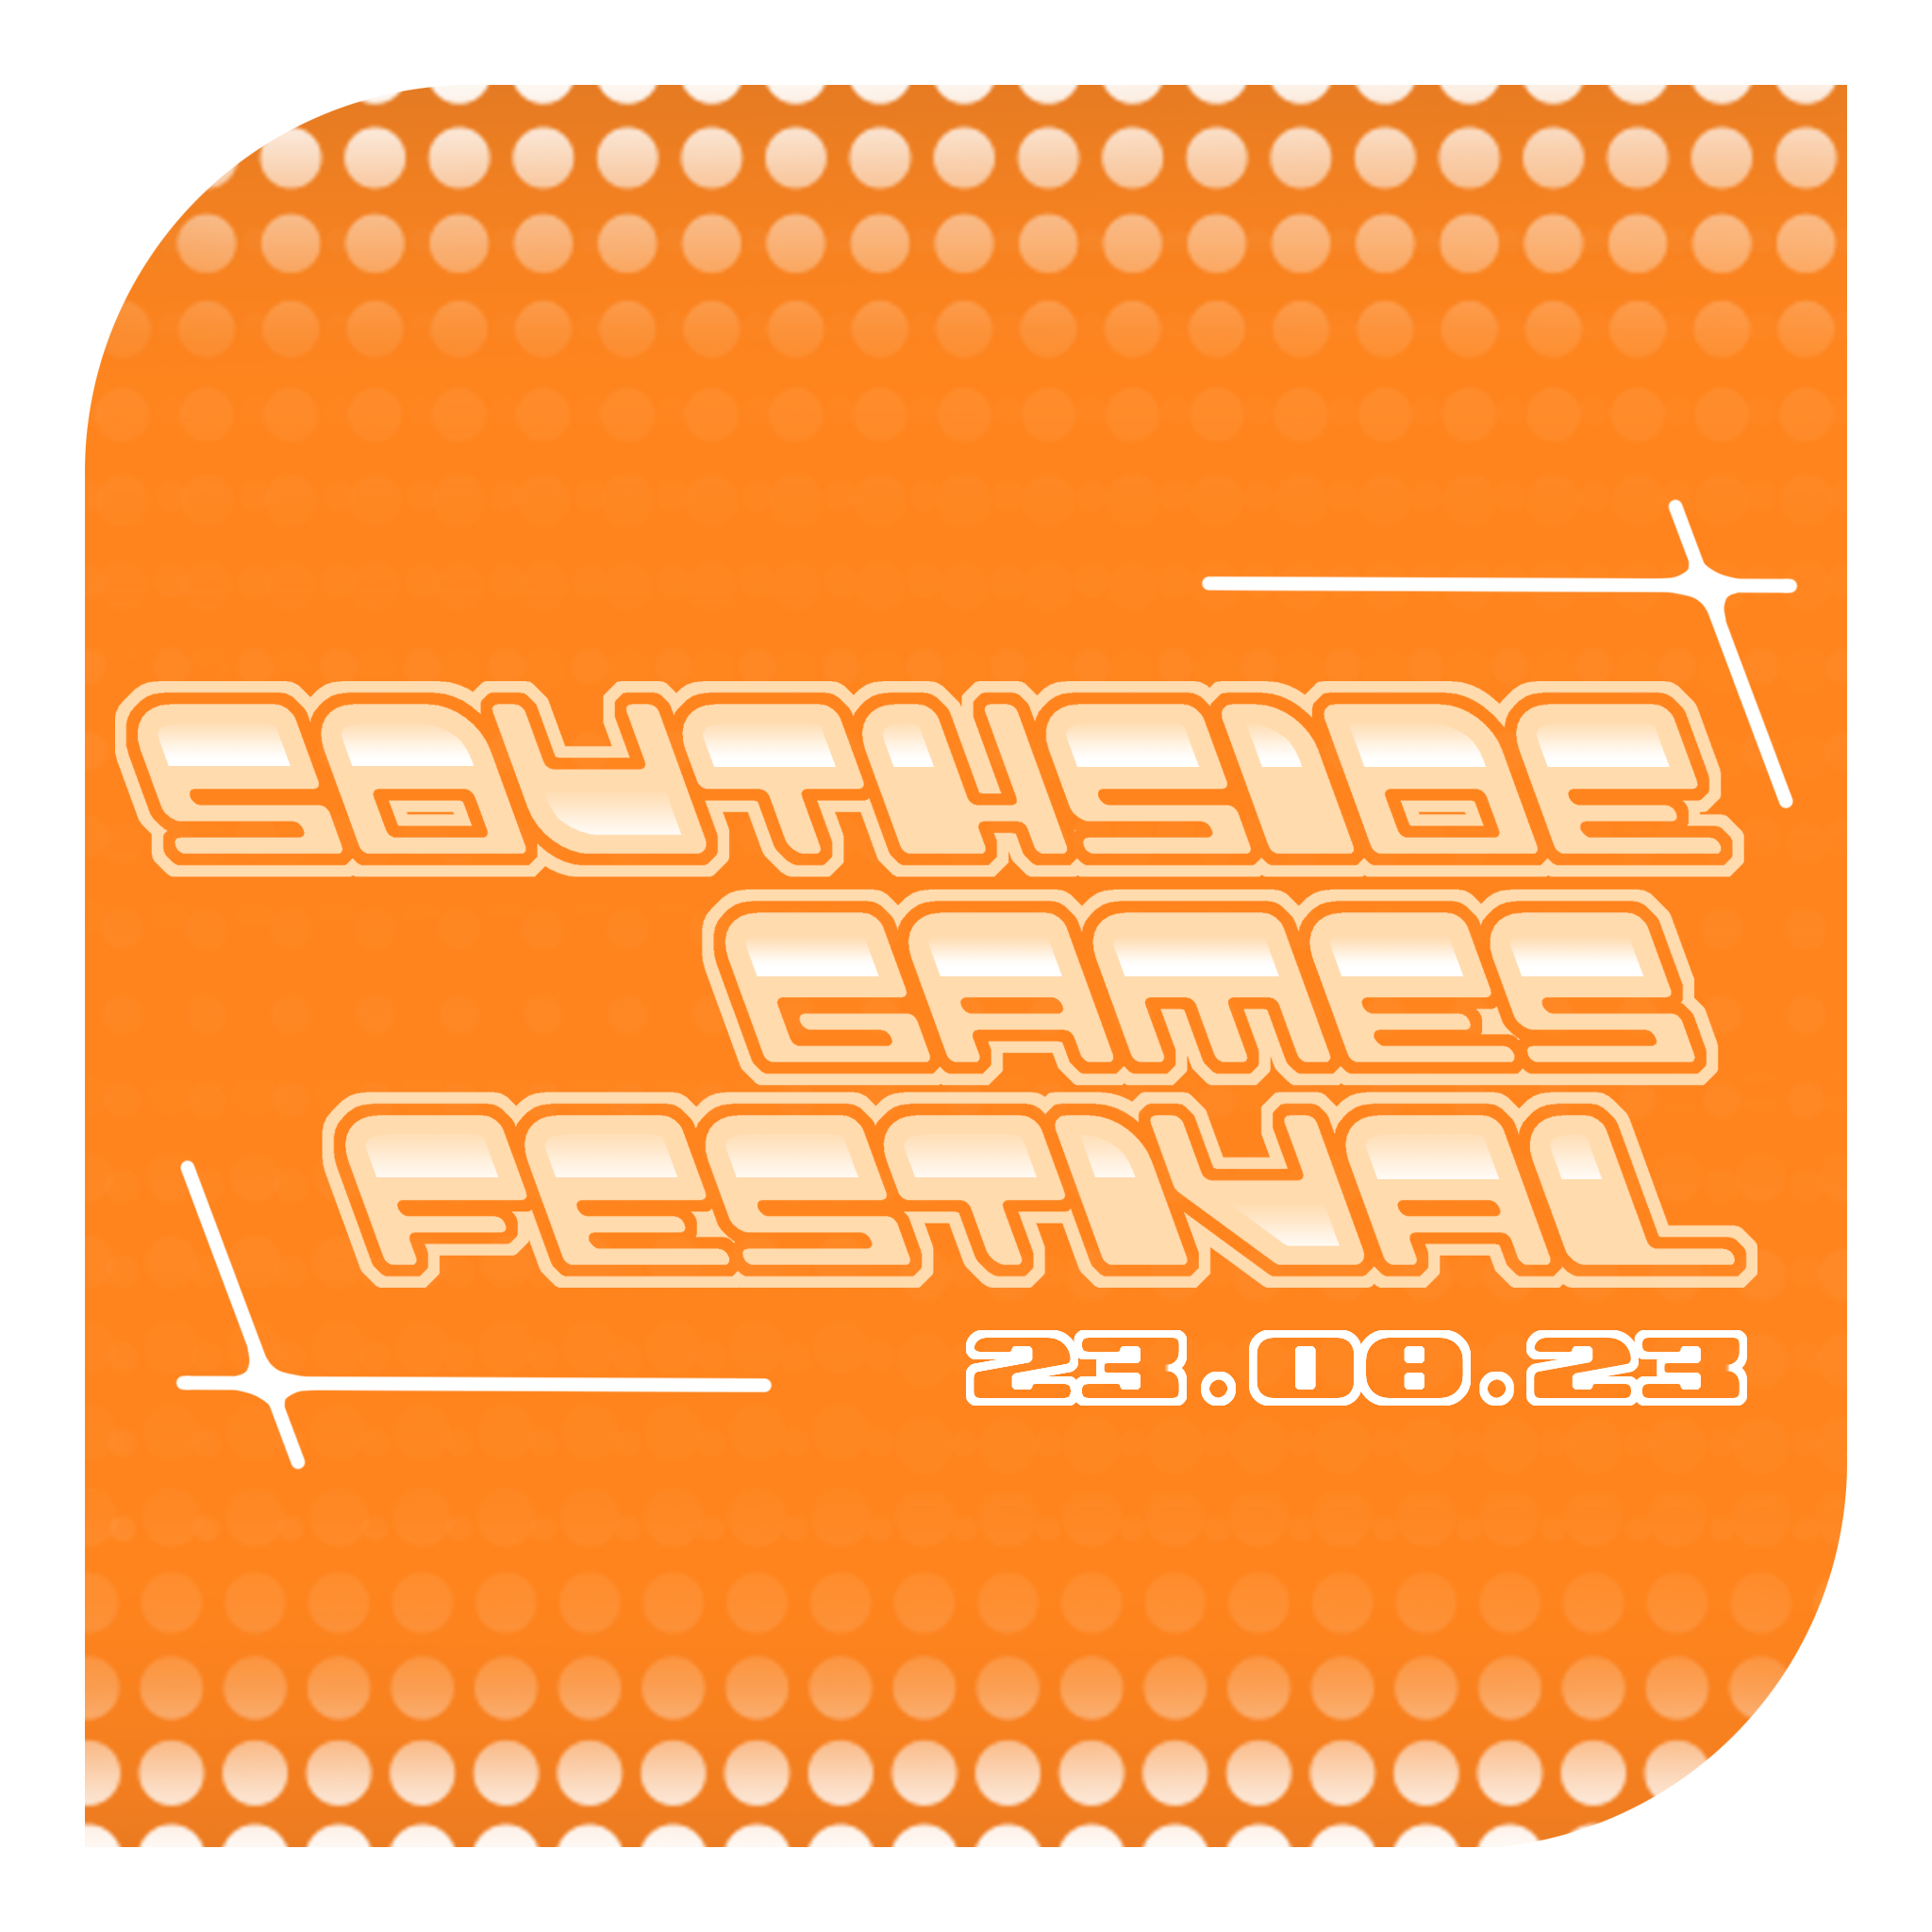 Southside Games Festival